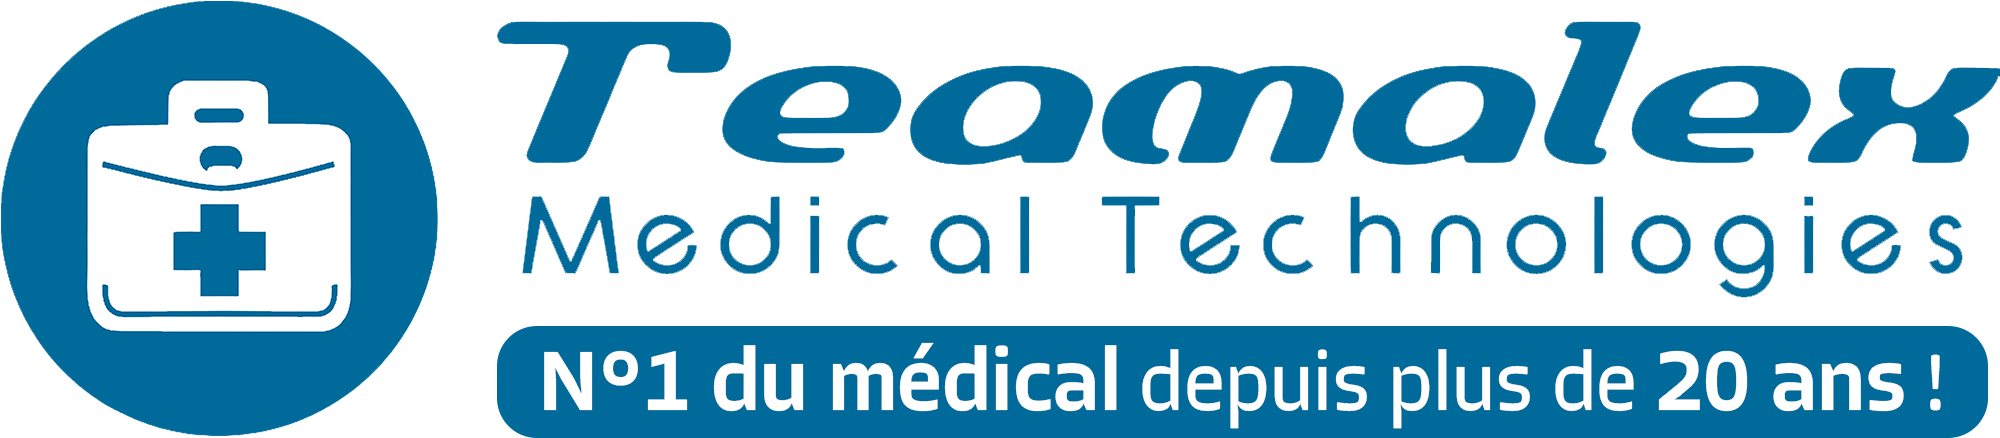 Teamalex Medical